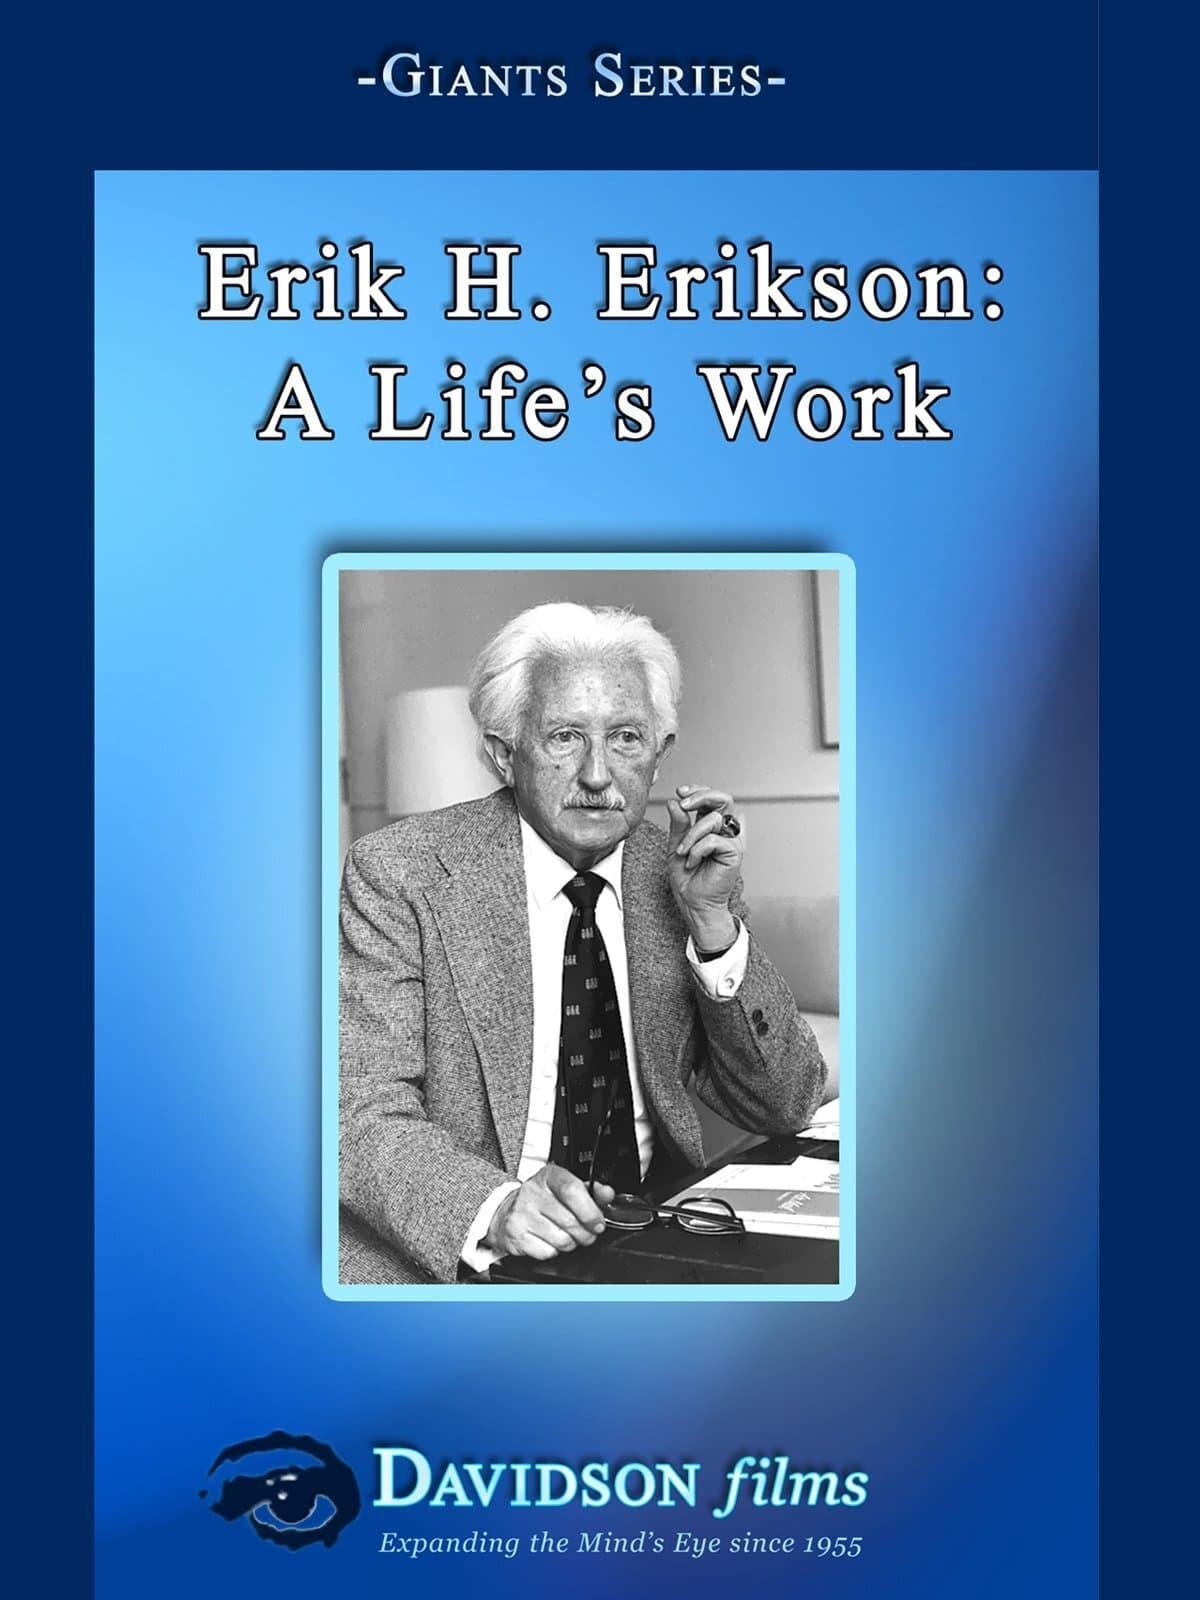 Erik H. Erikson: A Life's Work poster